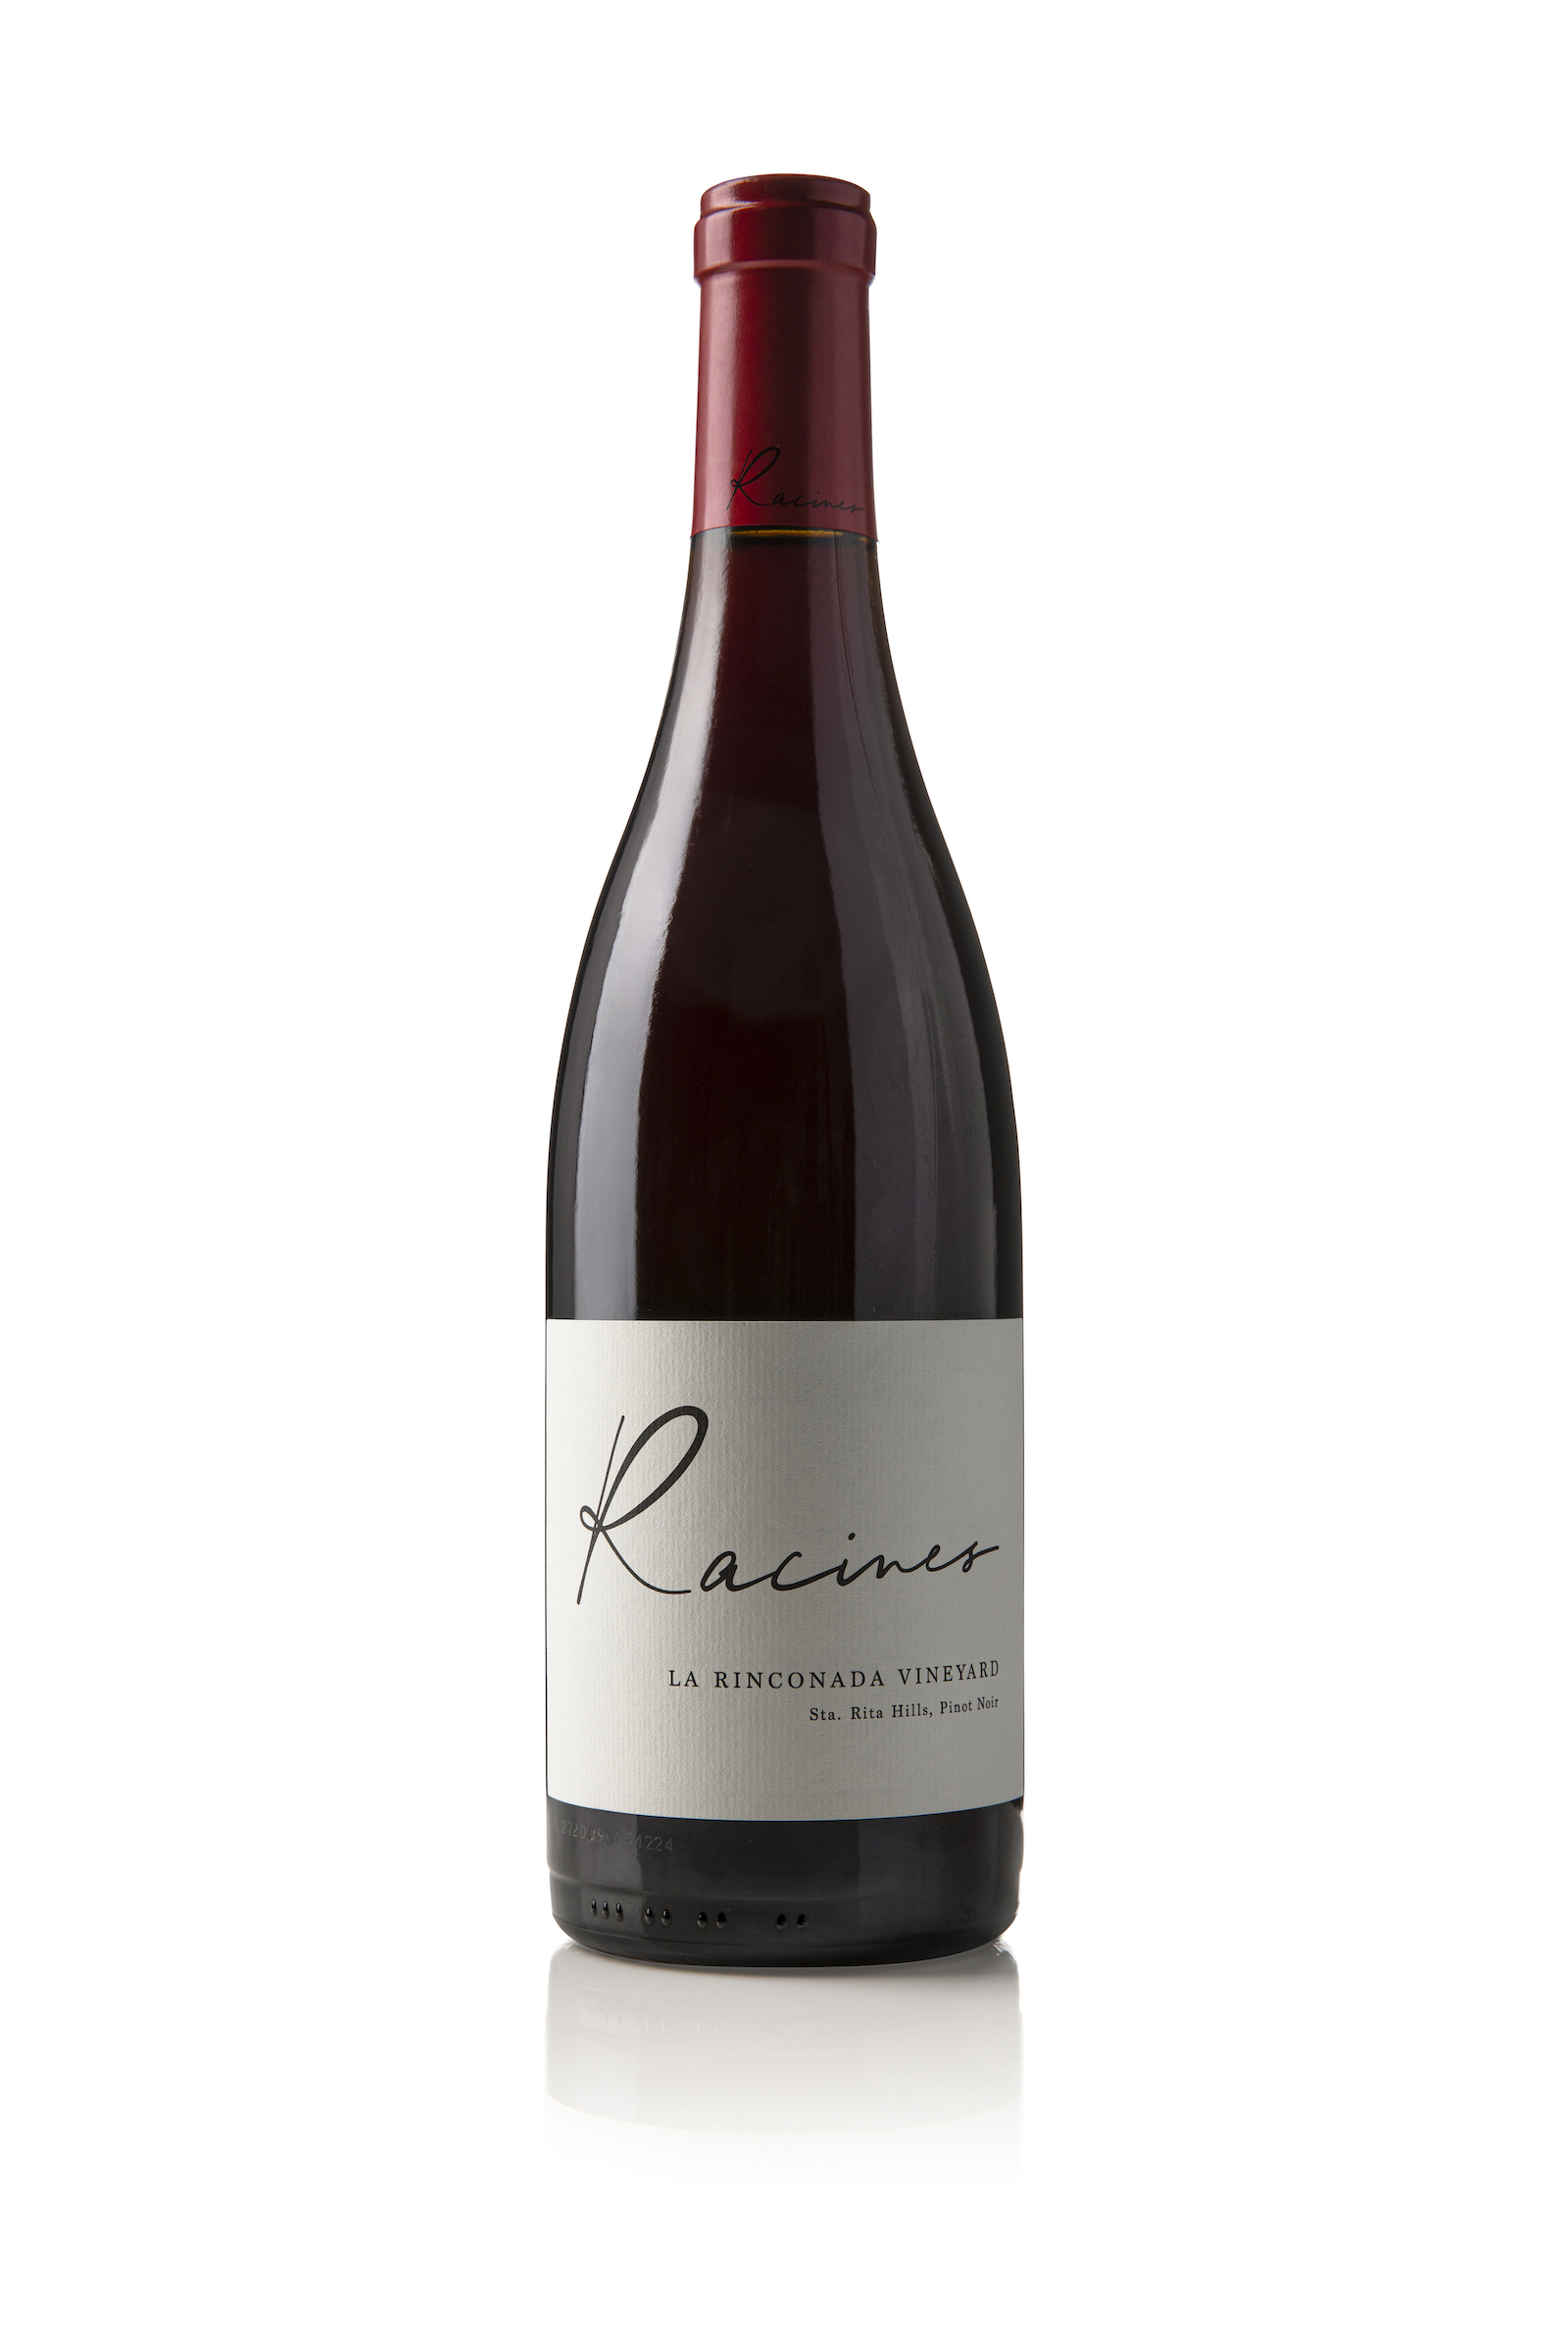 Bottle of Racines La Rinconda Vineyard Sta. Rita Hills Pinot Noir